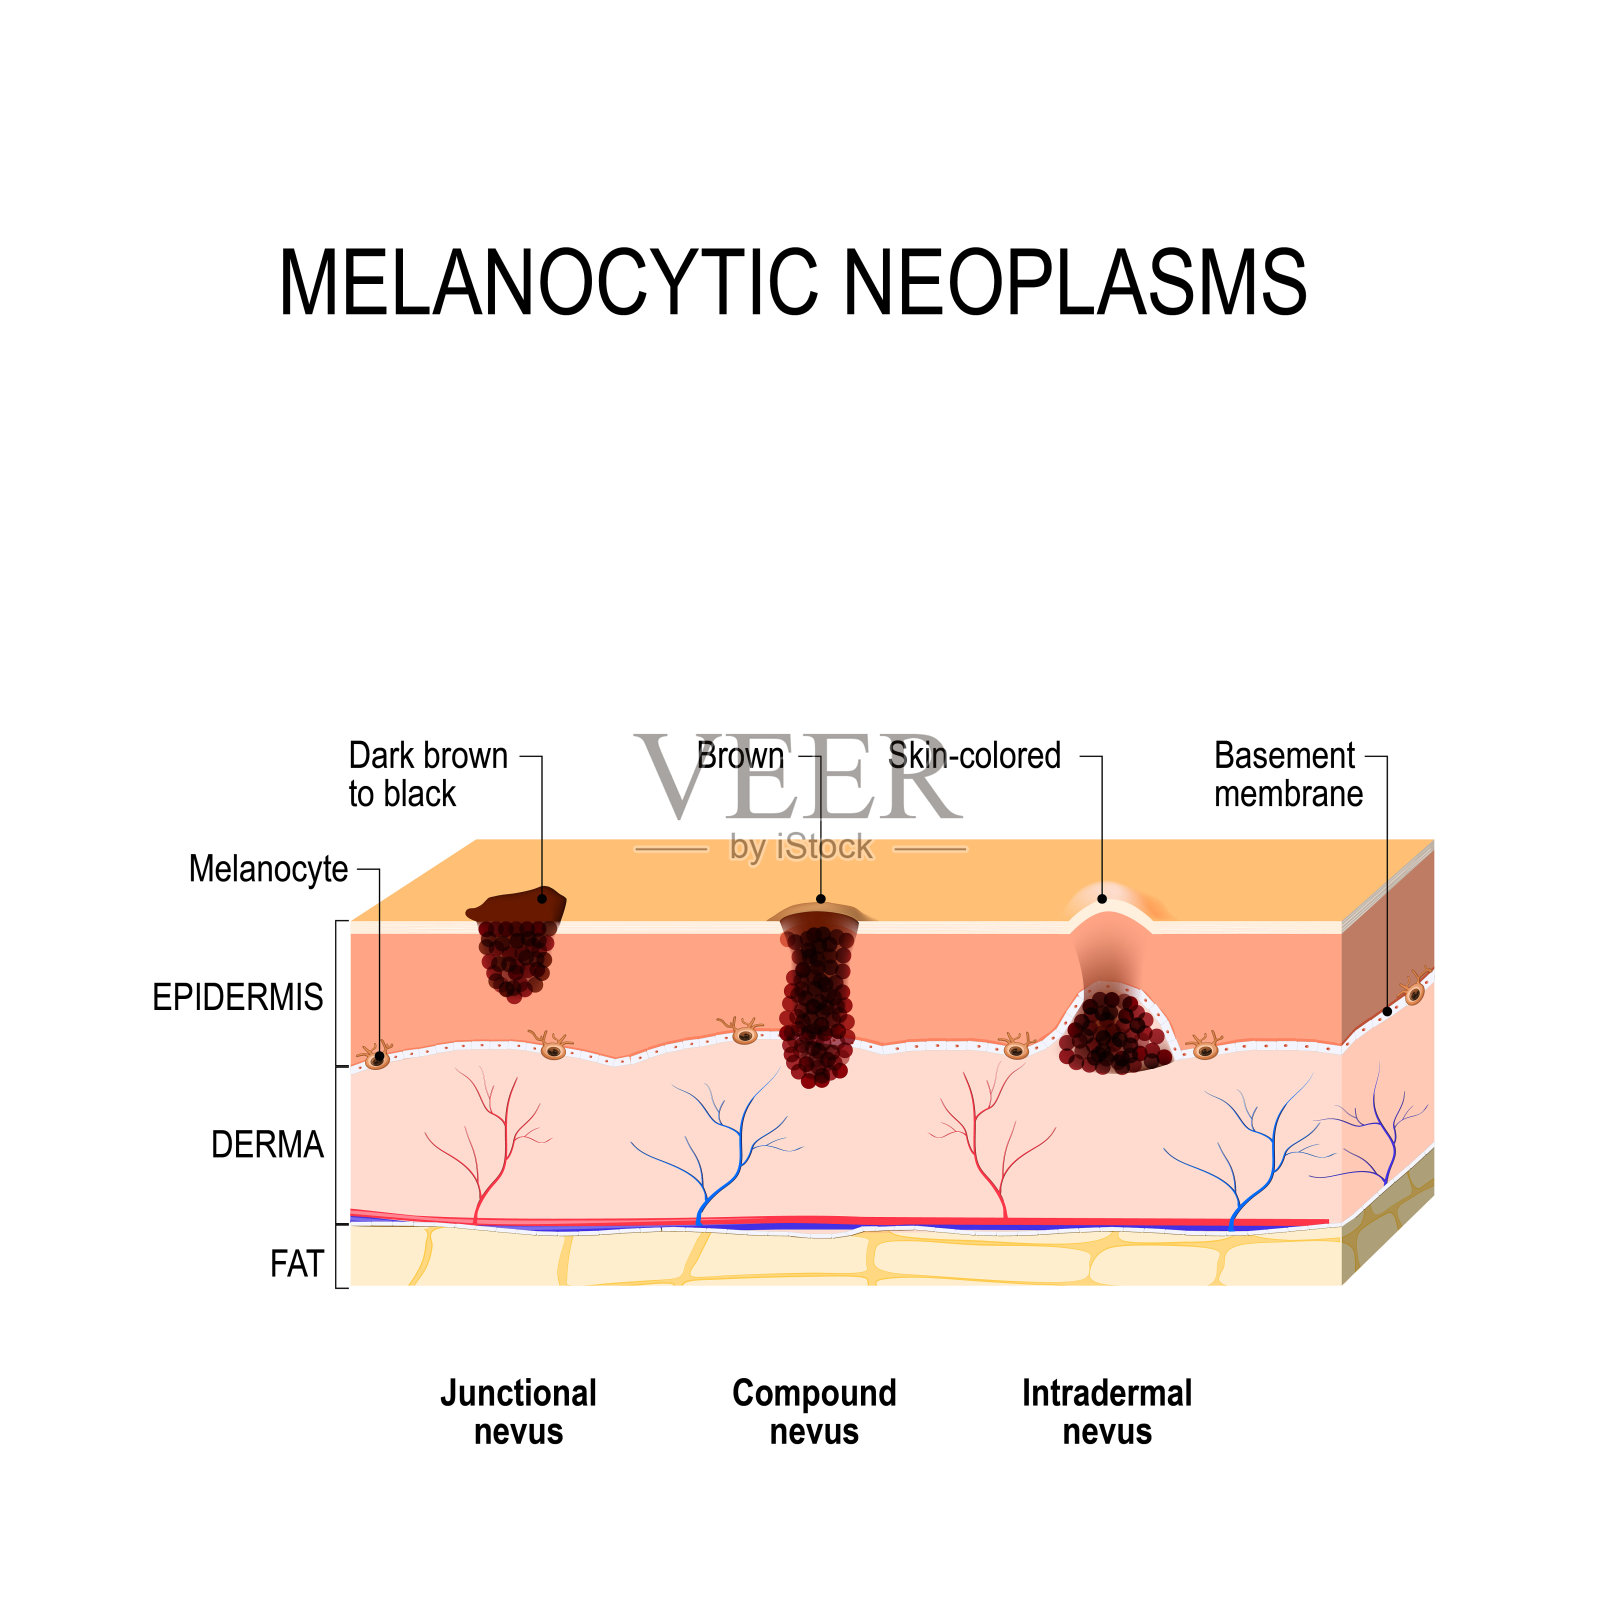 Melanocytic痣。胎记，痣和痣的区别插画图片素材